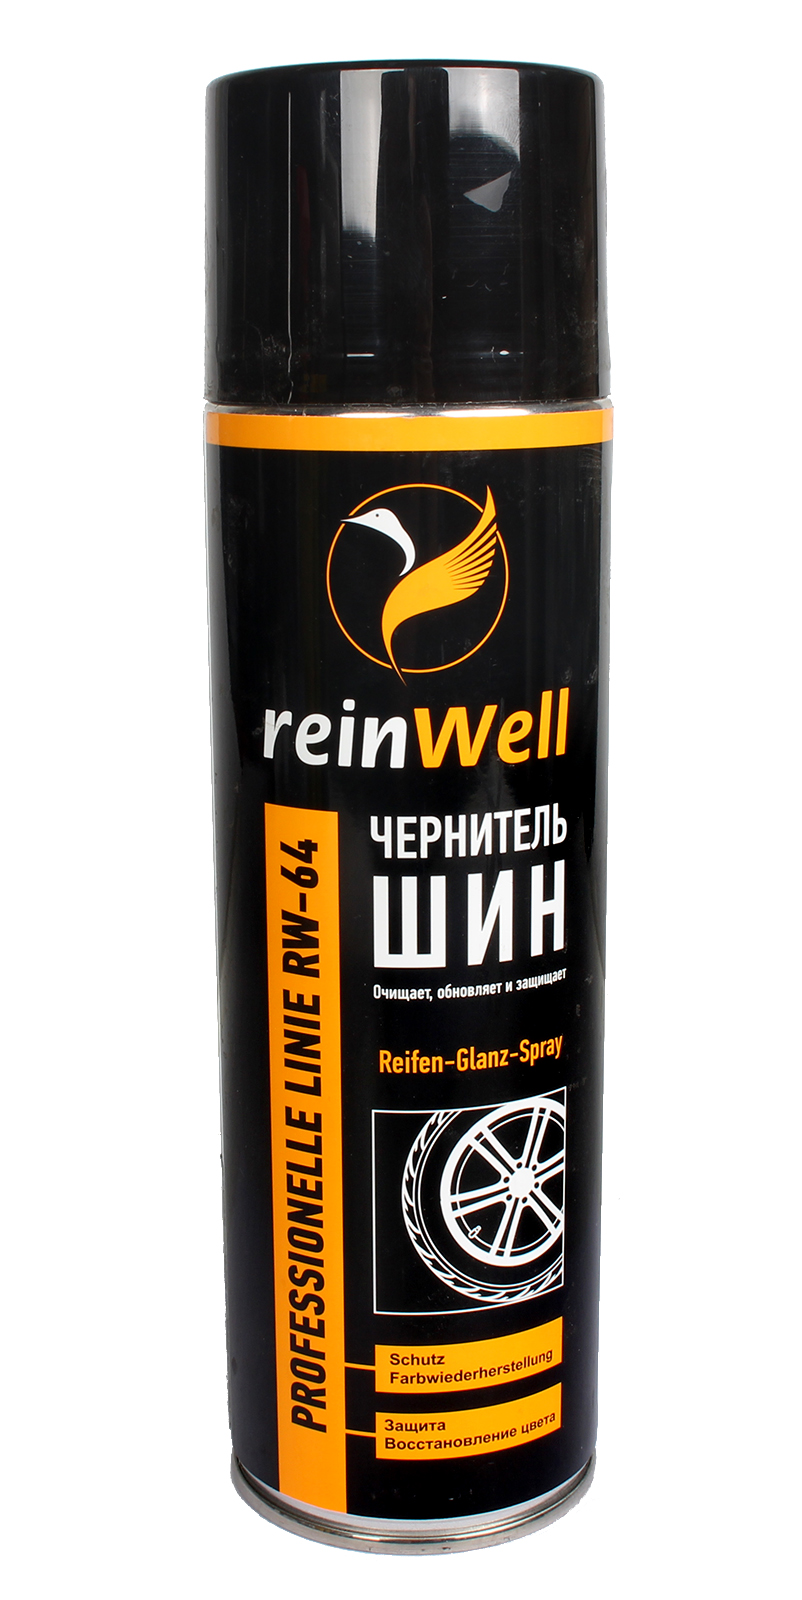 Чернитель Шин Rw-64 (0,5л) reinWell арт. 3260